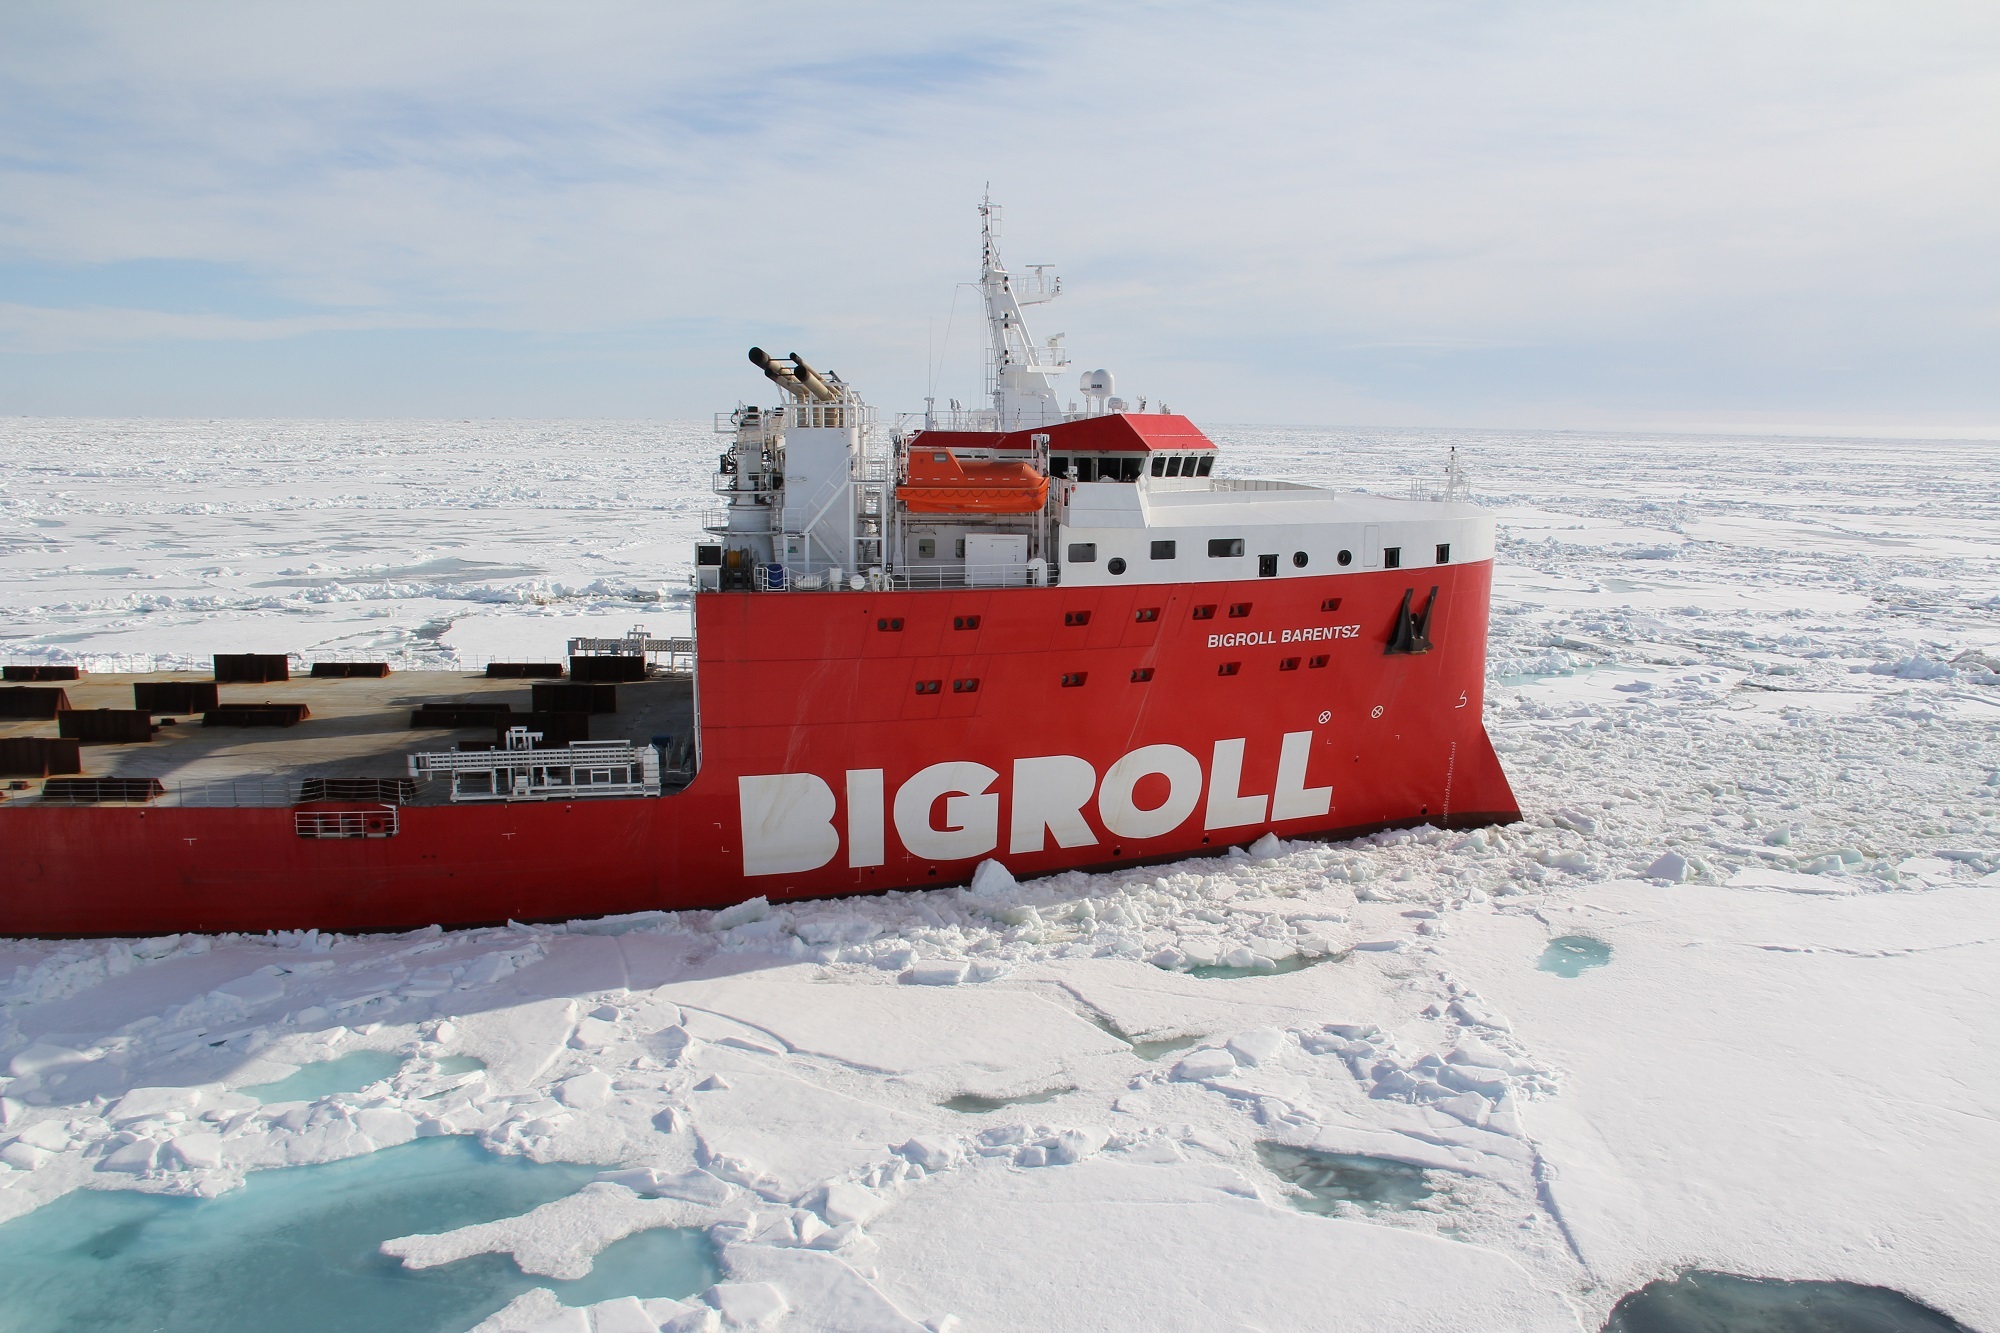 Arctic Bigroll Barentsz Ice Sea Ship 2000x1333